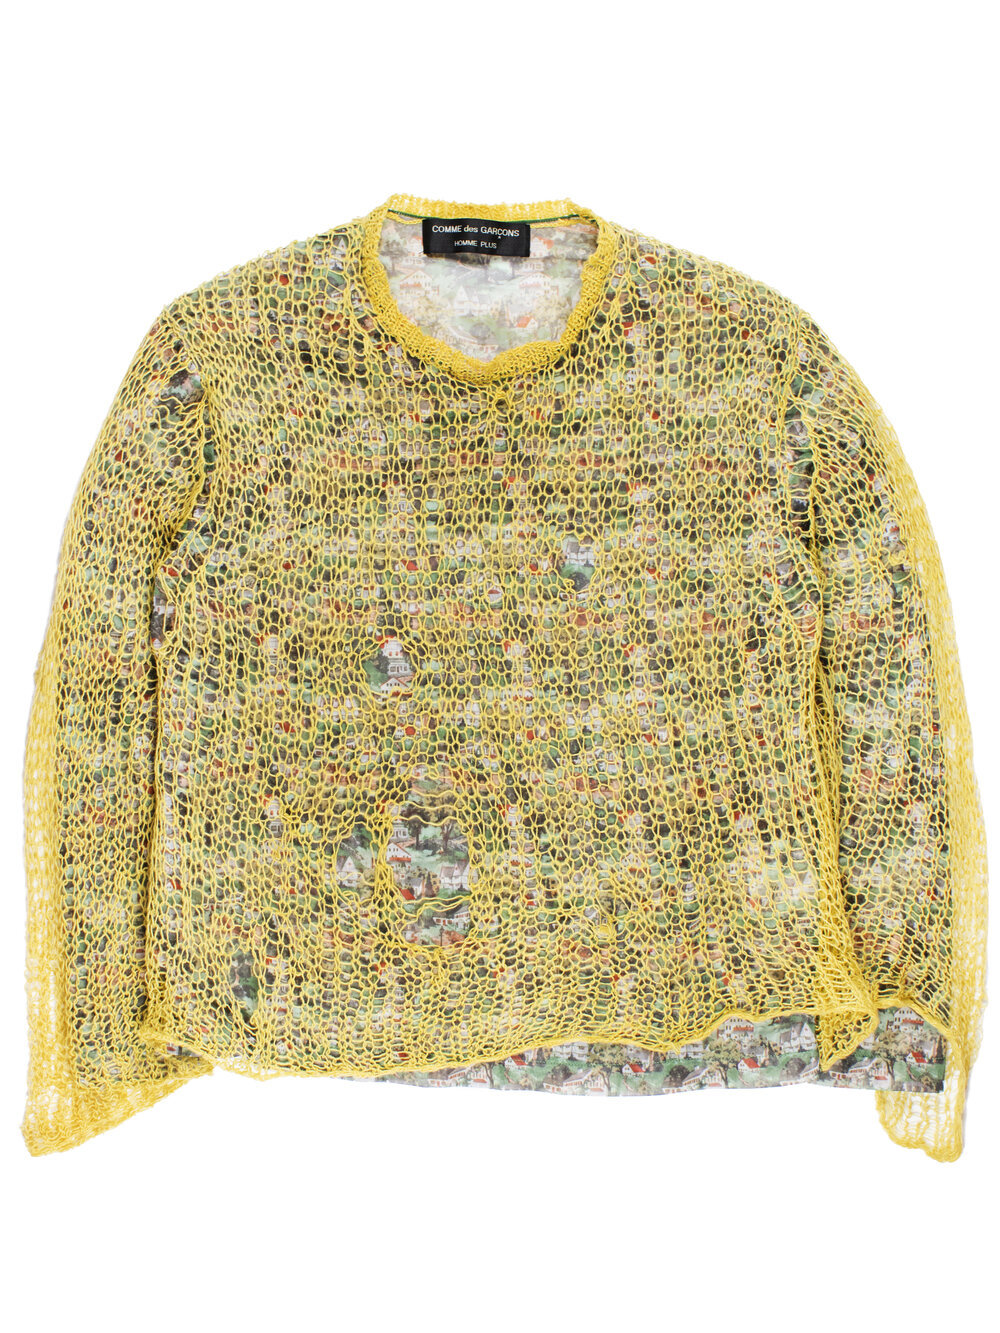 Comme des Garçons Homme Plus SS1997 Layered Sweater — Middleman Store